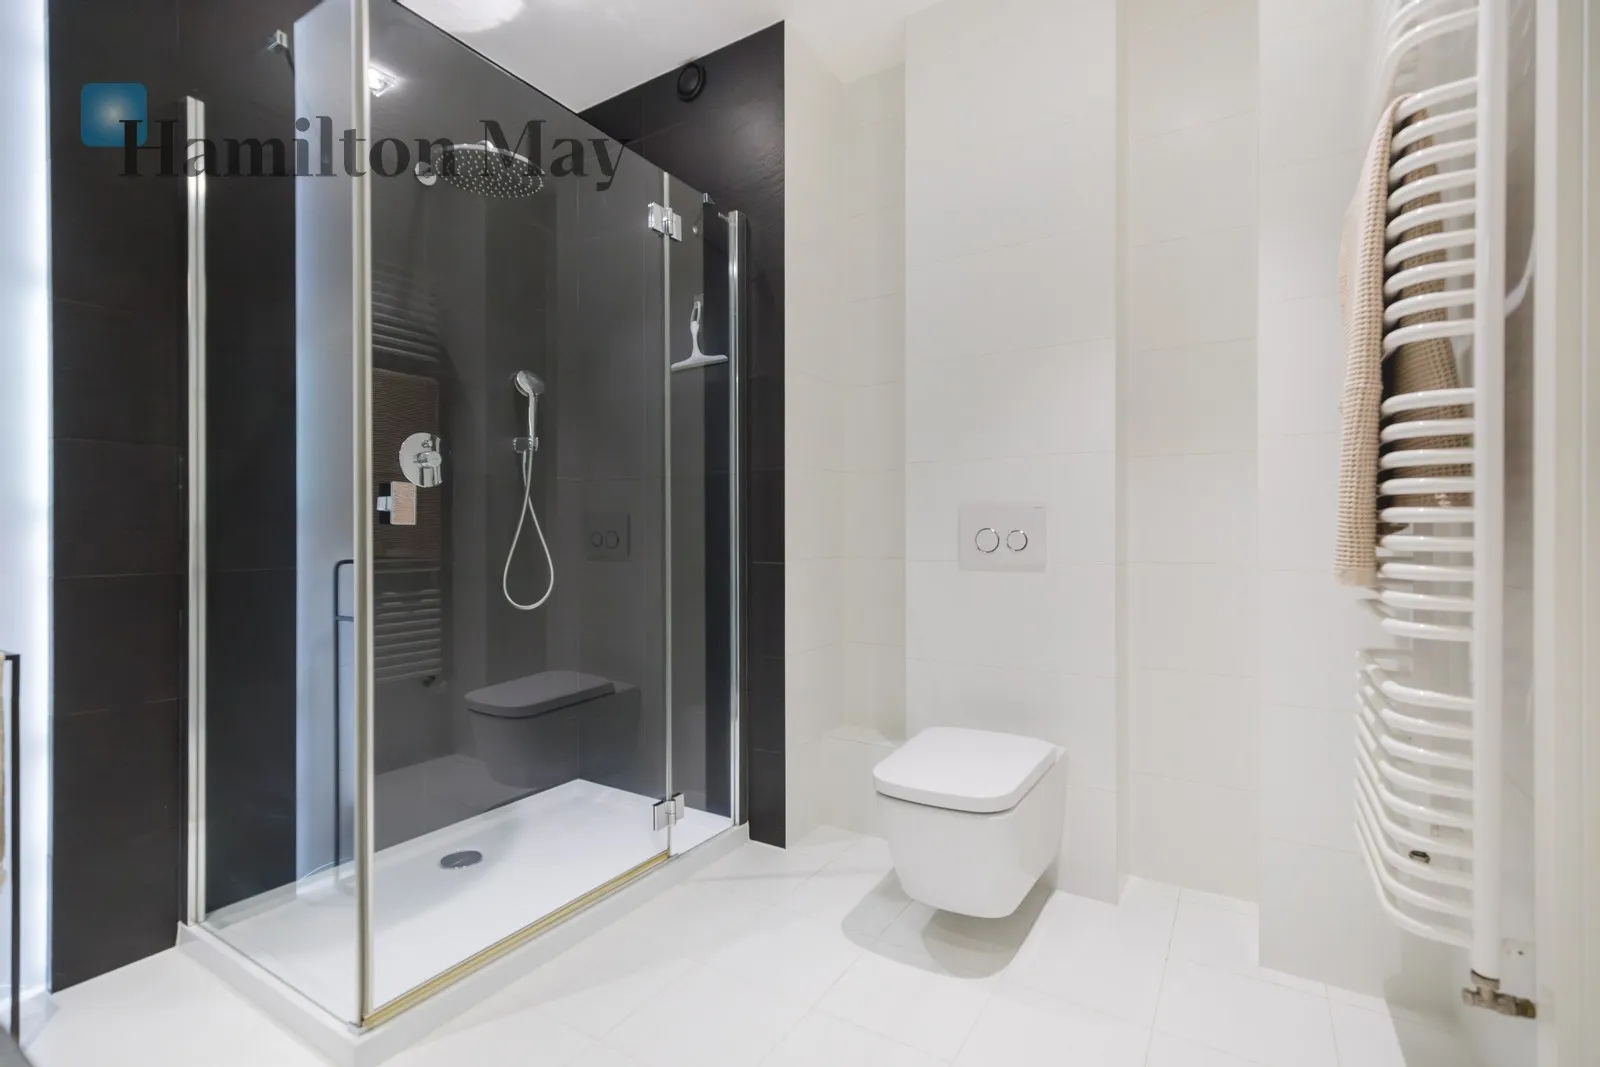 Bedrooms: 1 Bathrooms: 1 Size: 56m2 Price/m2: 14732 PLN